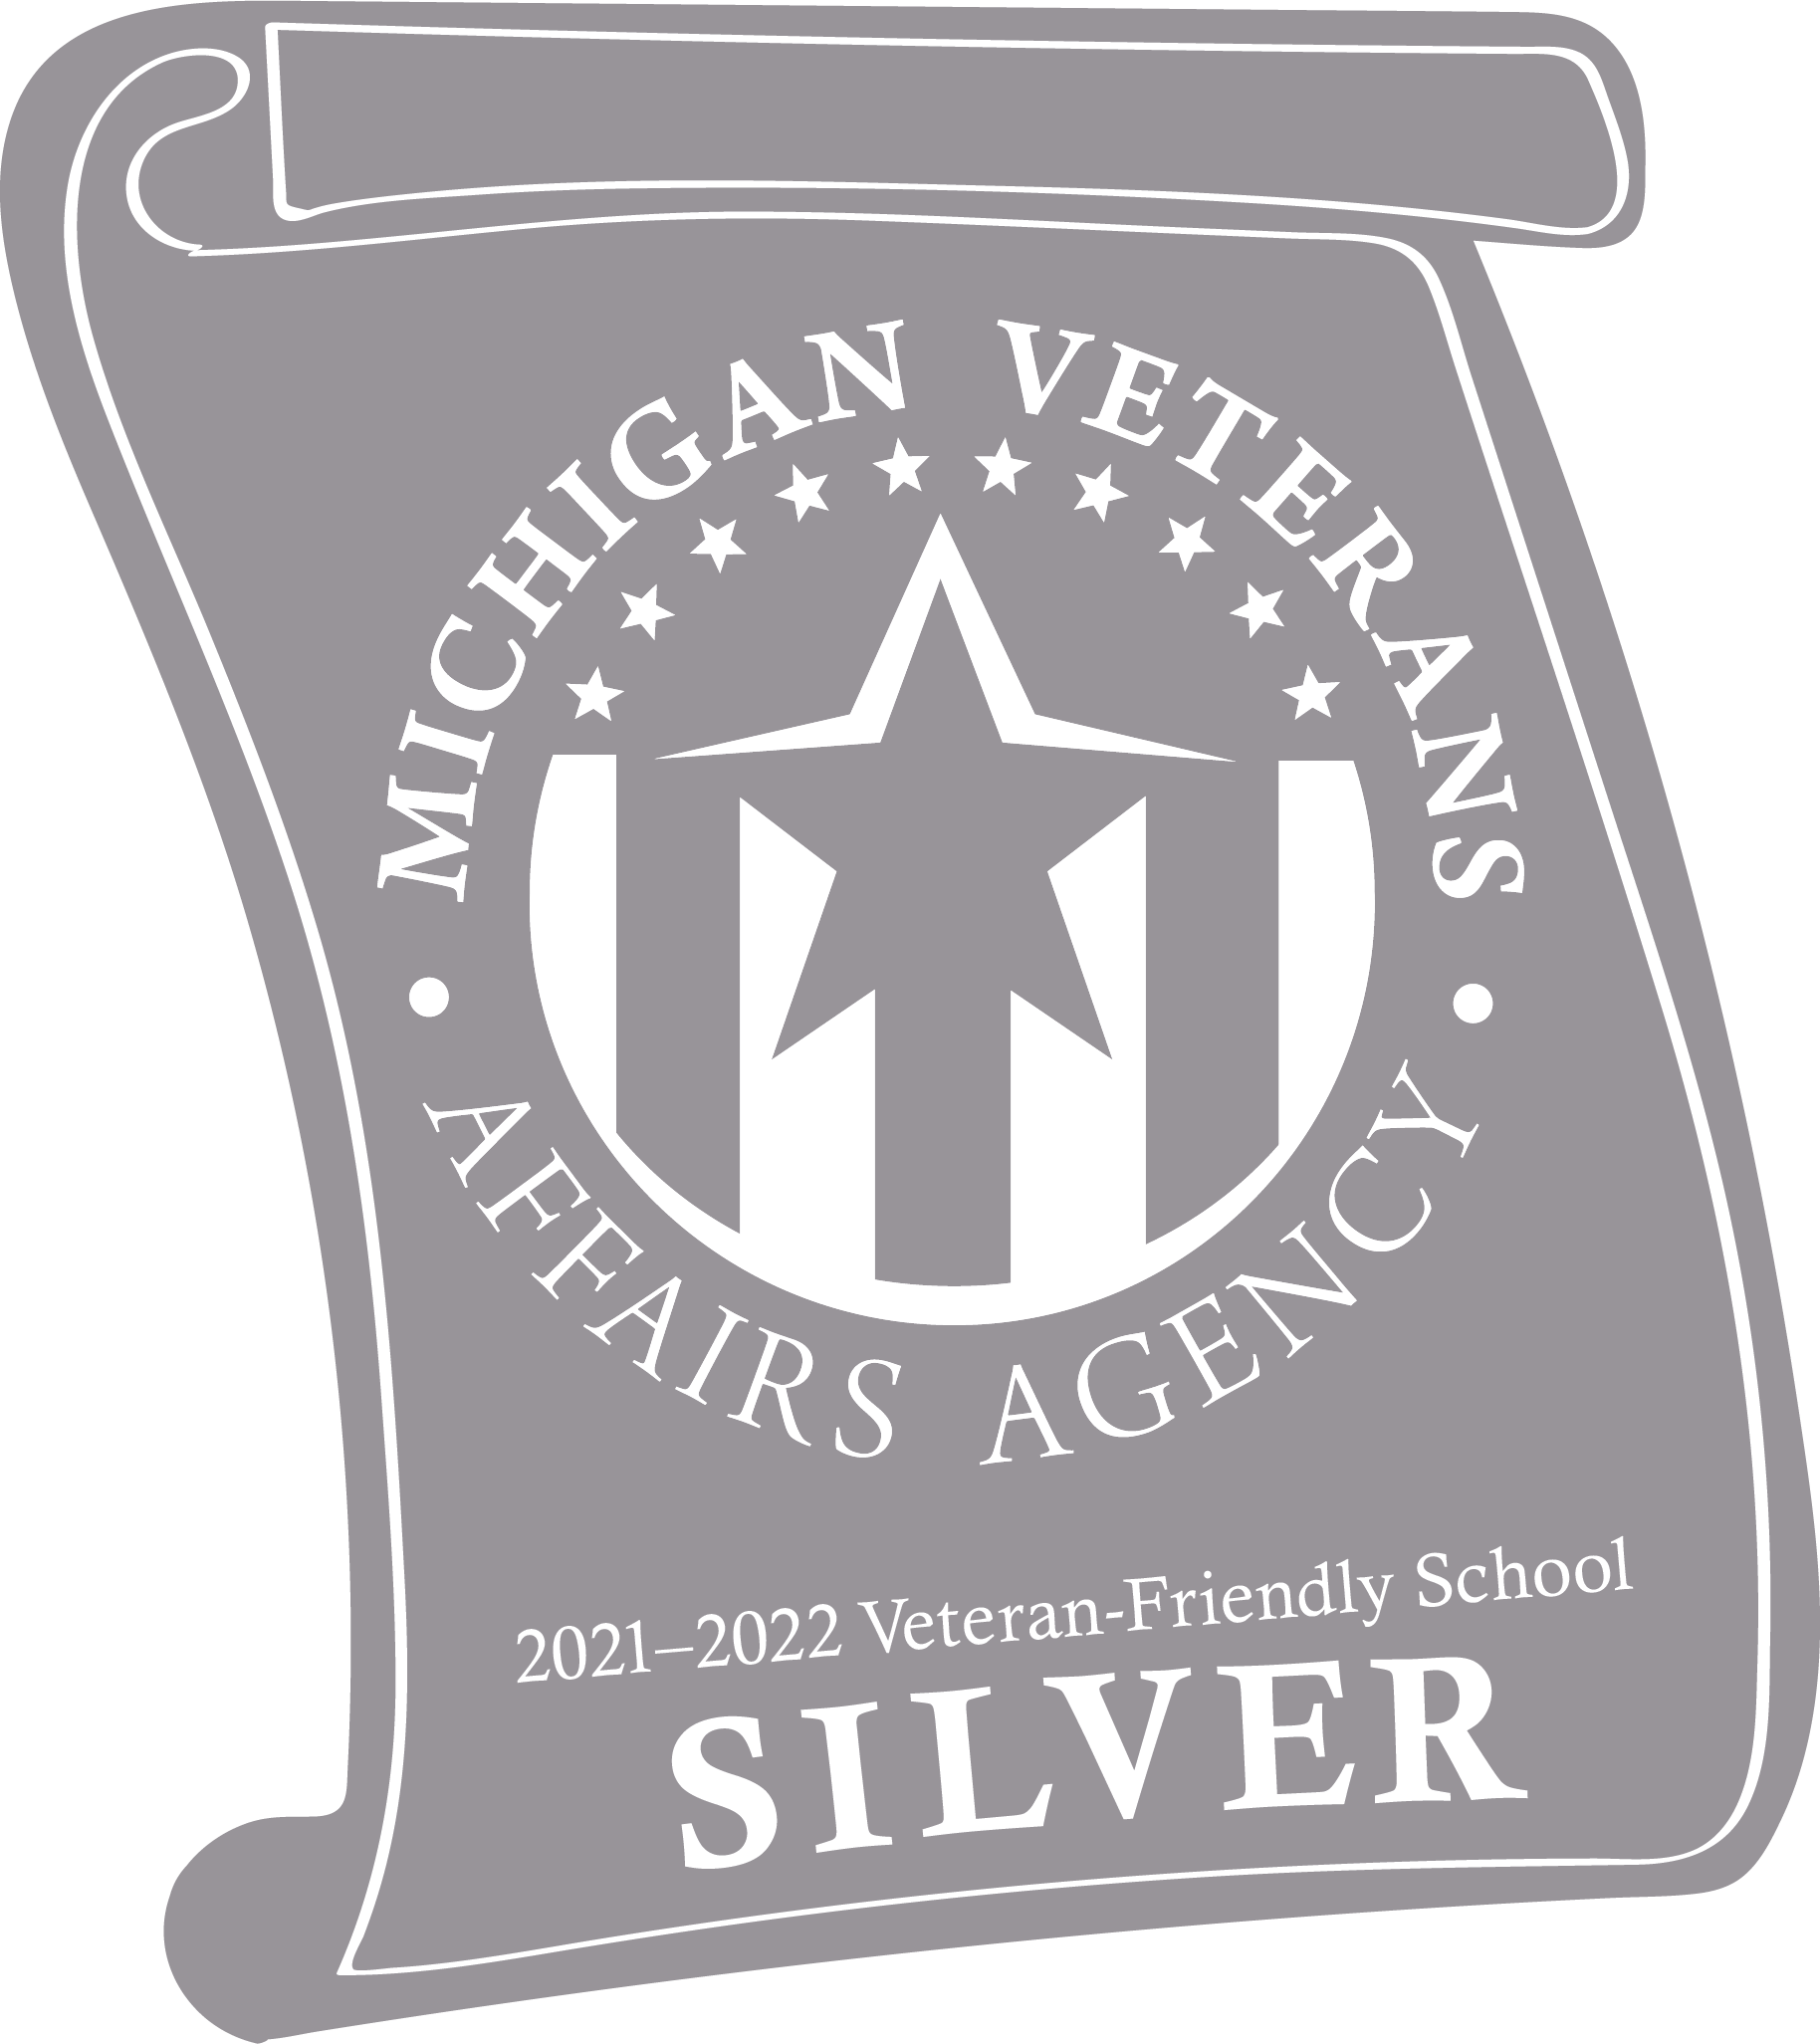 Silver Certified Veterans School Image